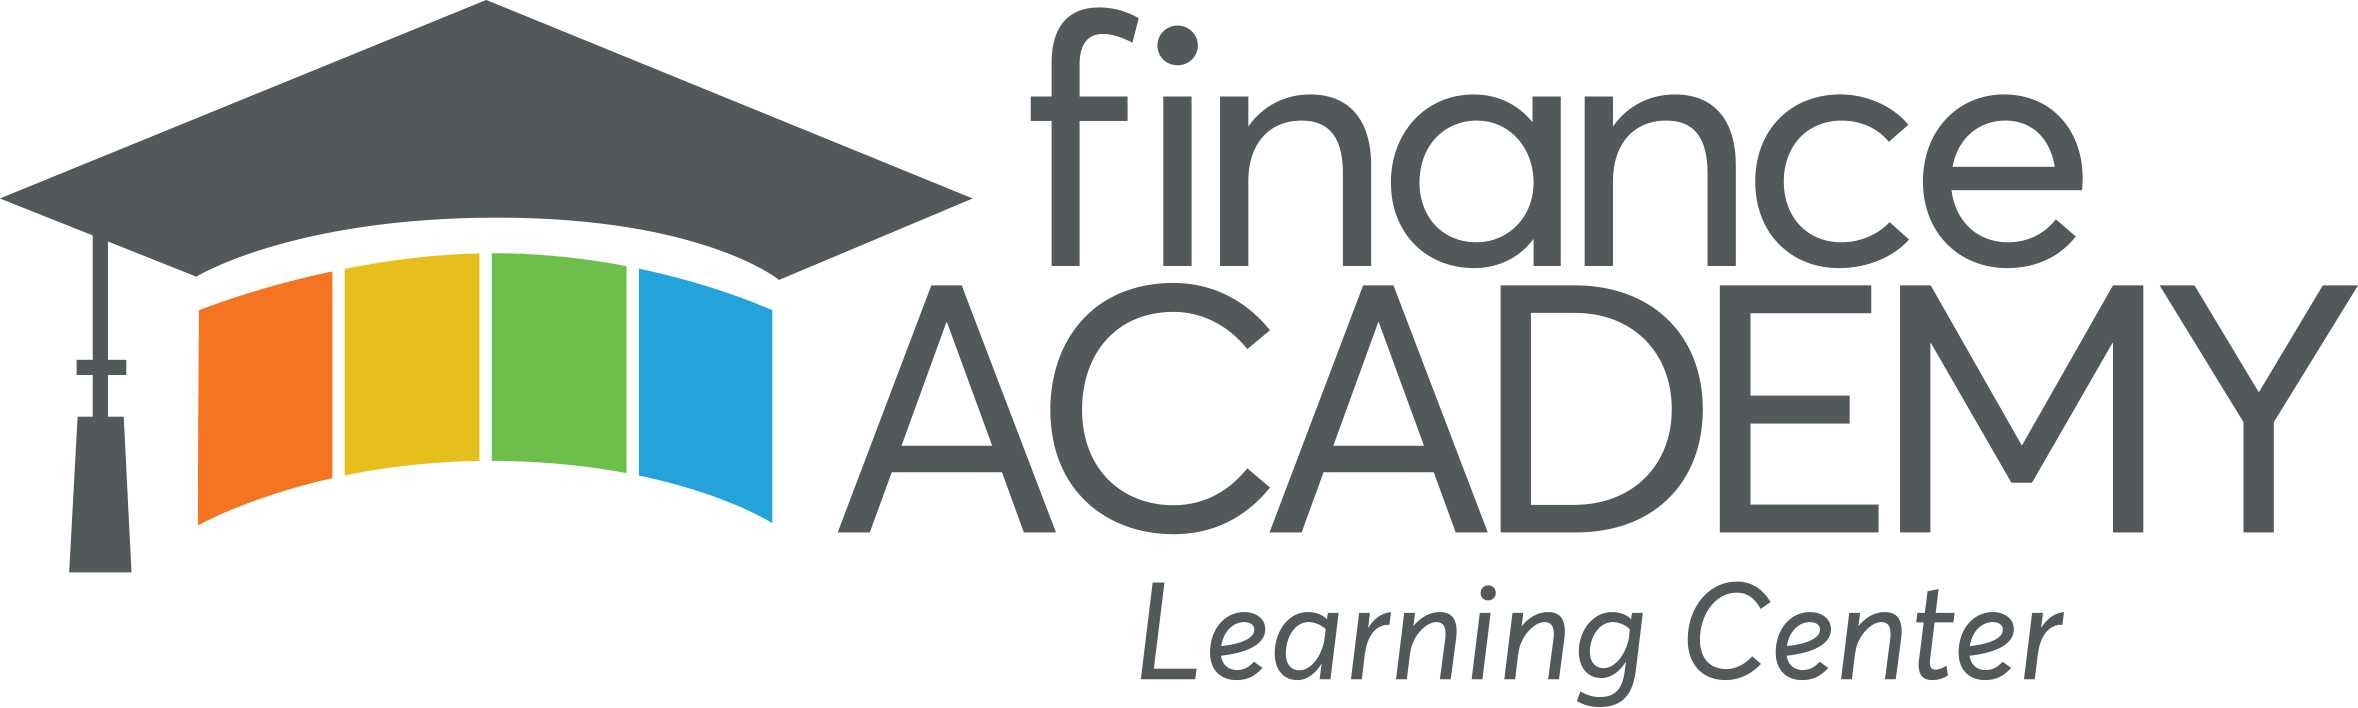 Finance Academy Learning Center